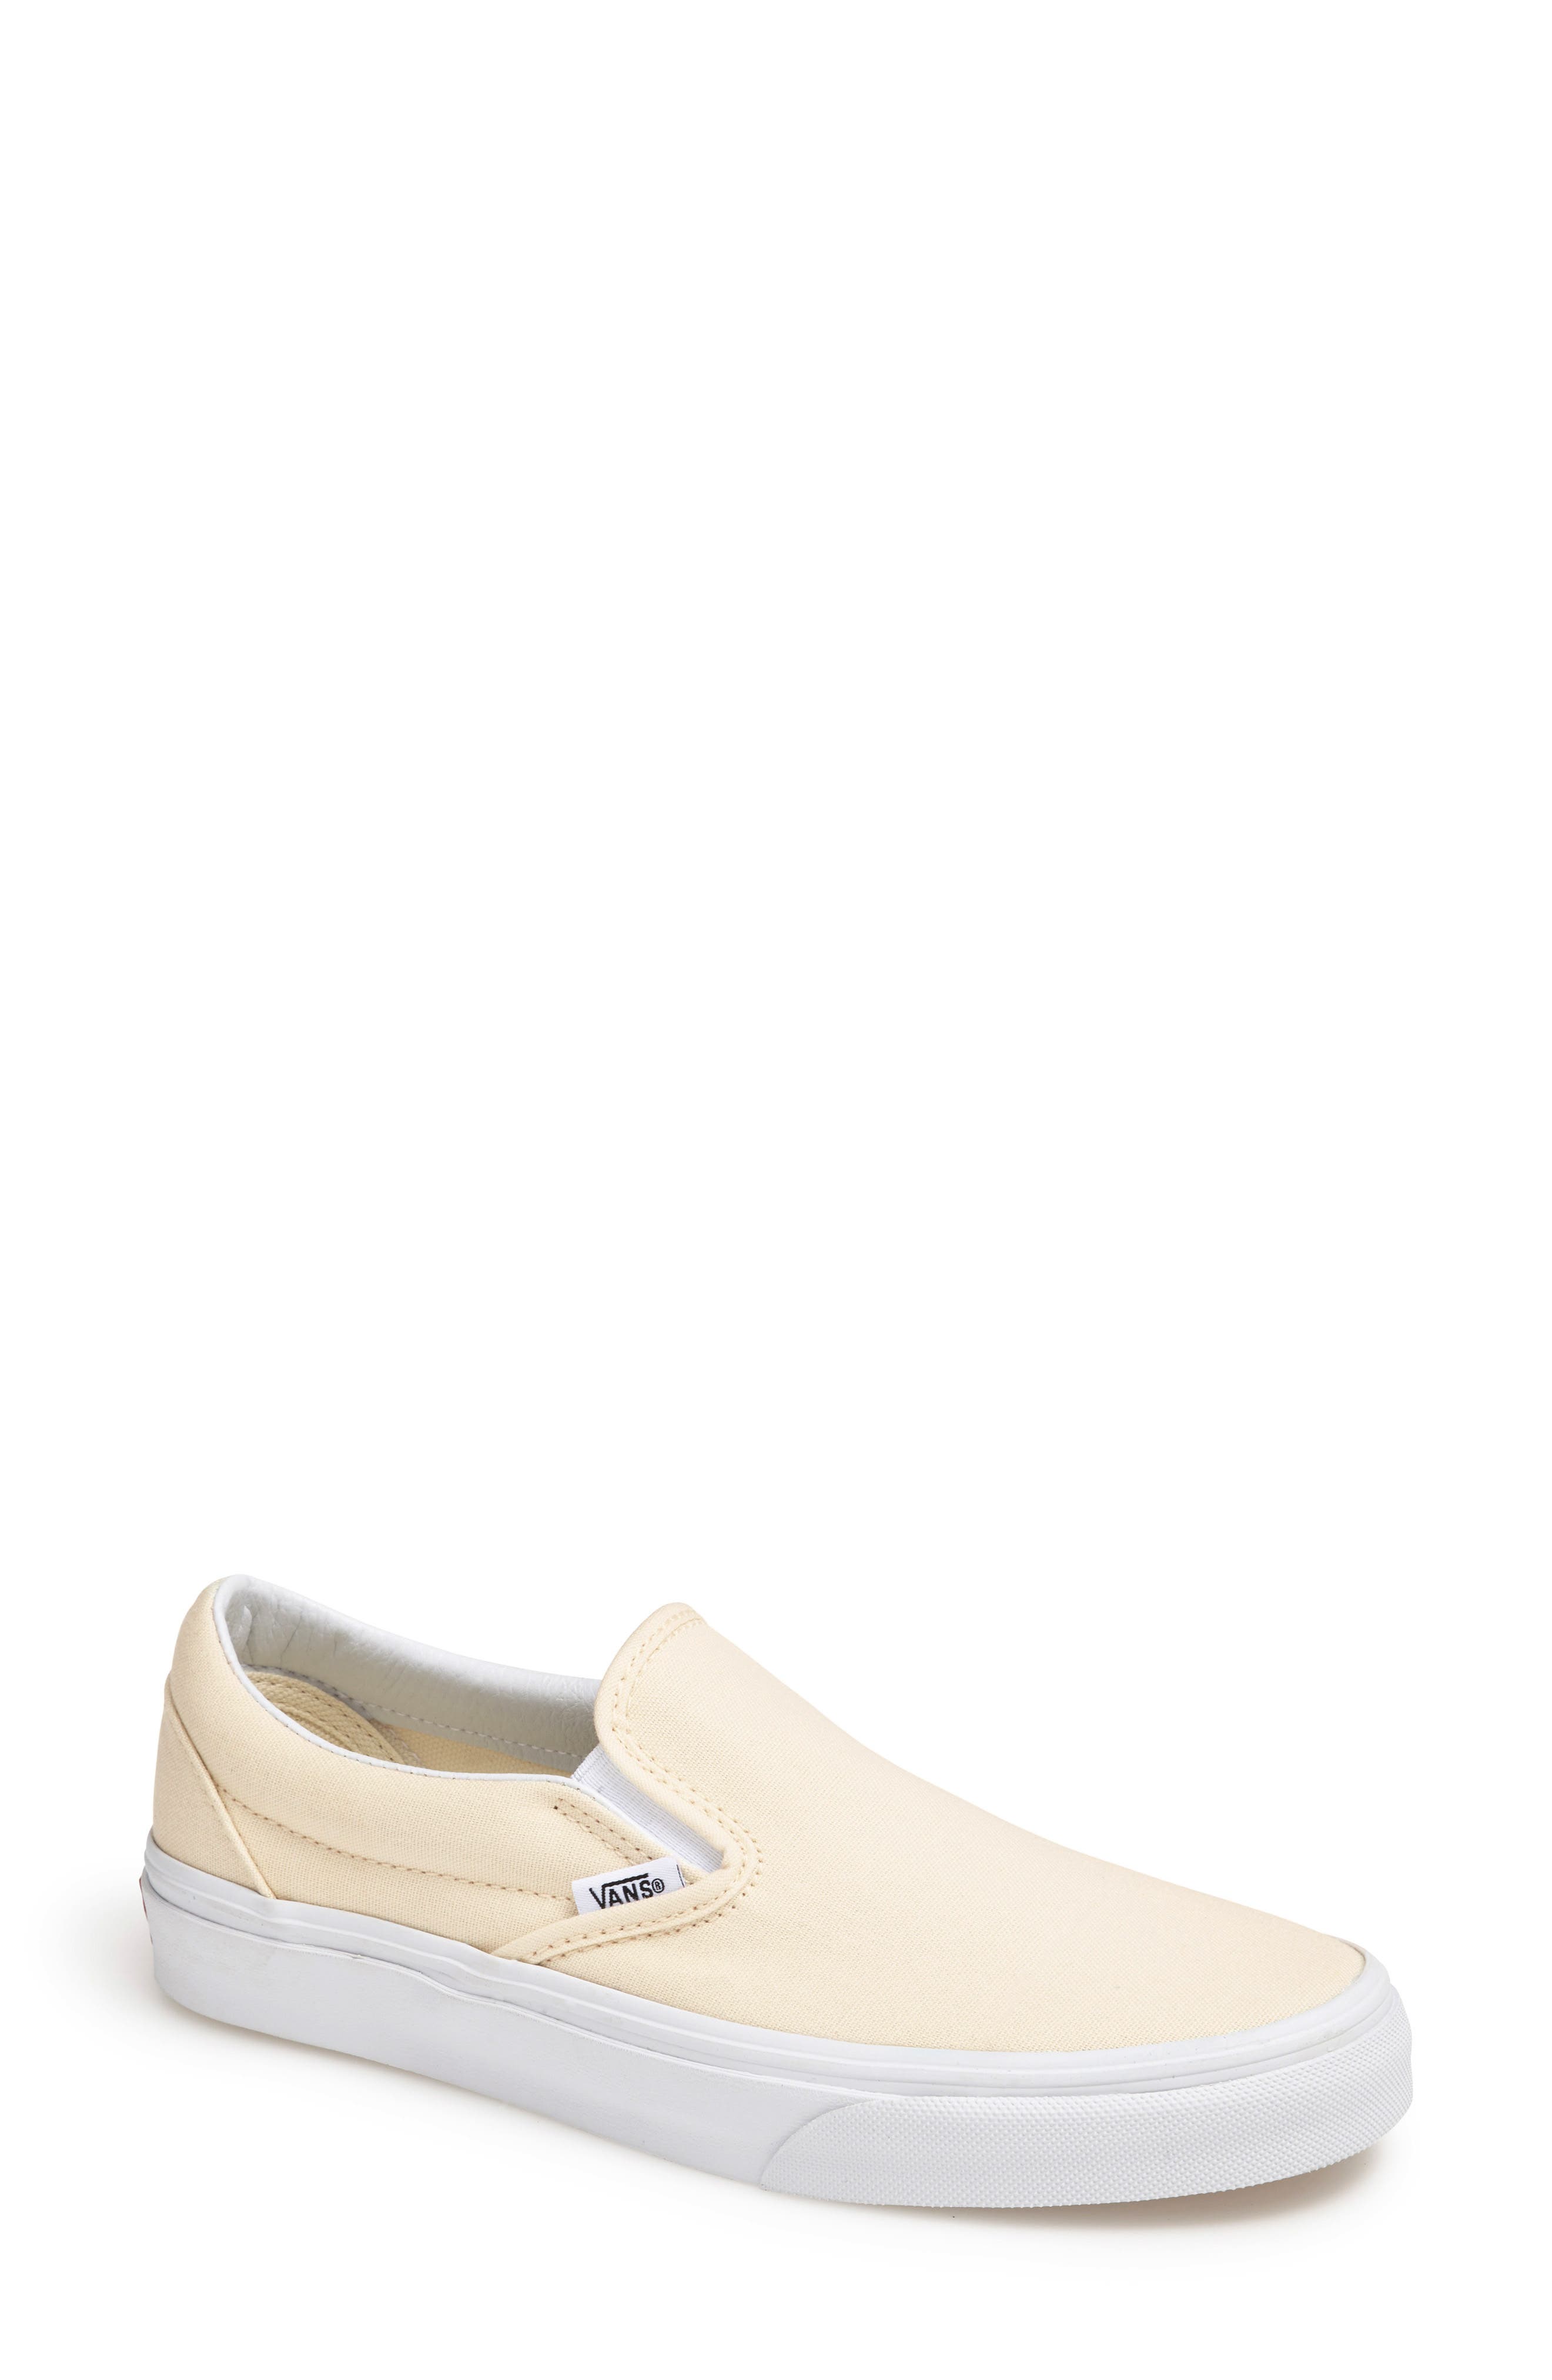 white vans boat shoes